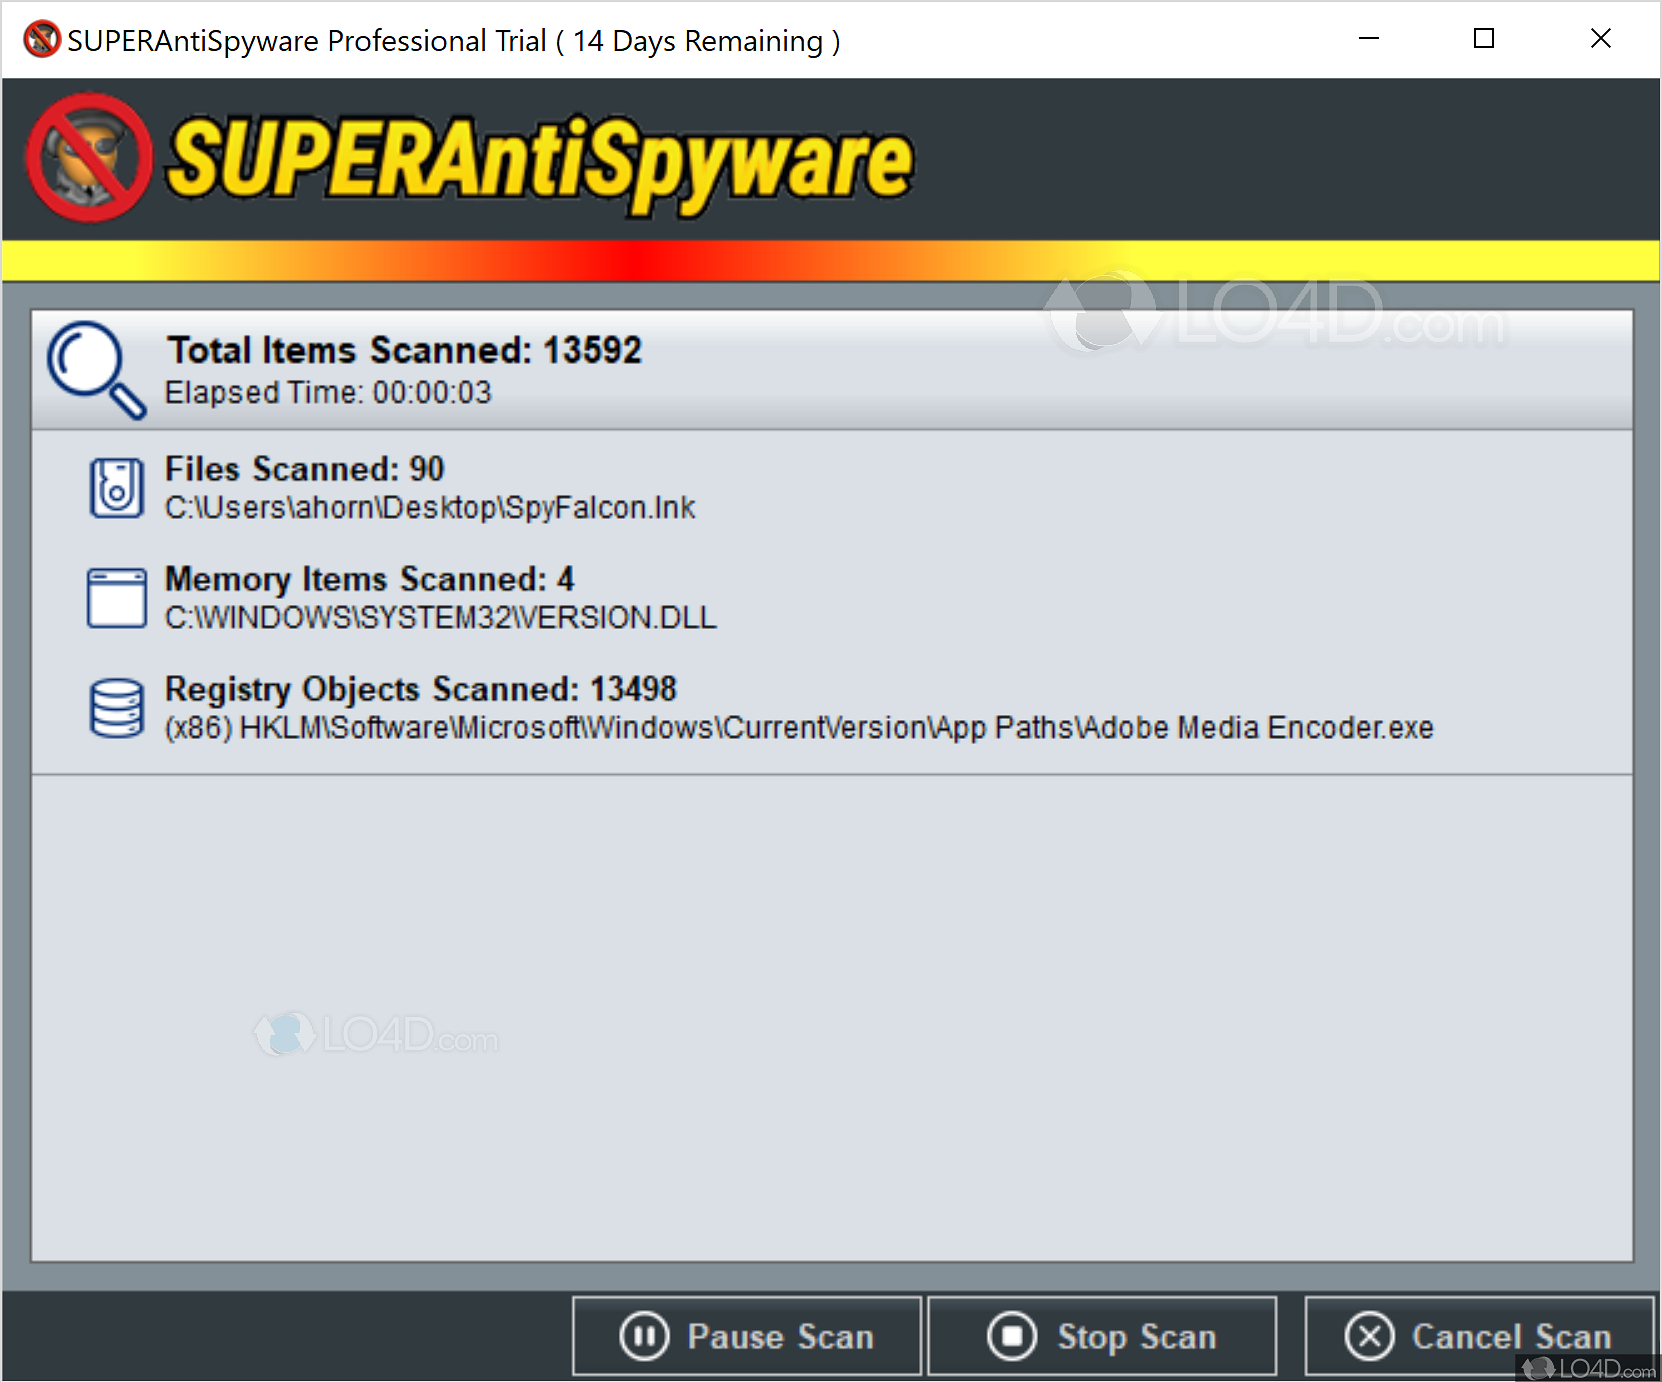 Super Anti Spyware Registration Code